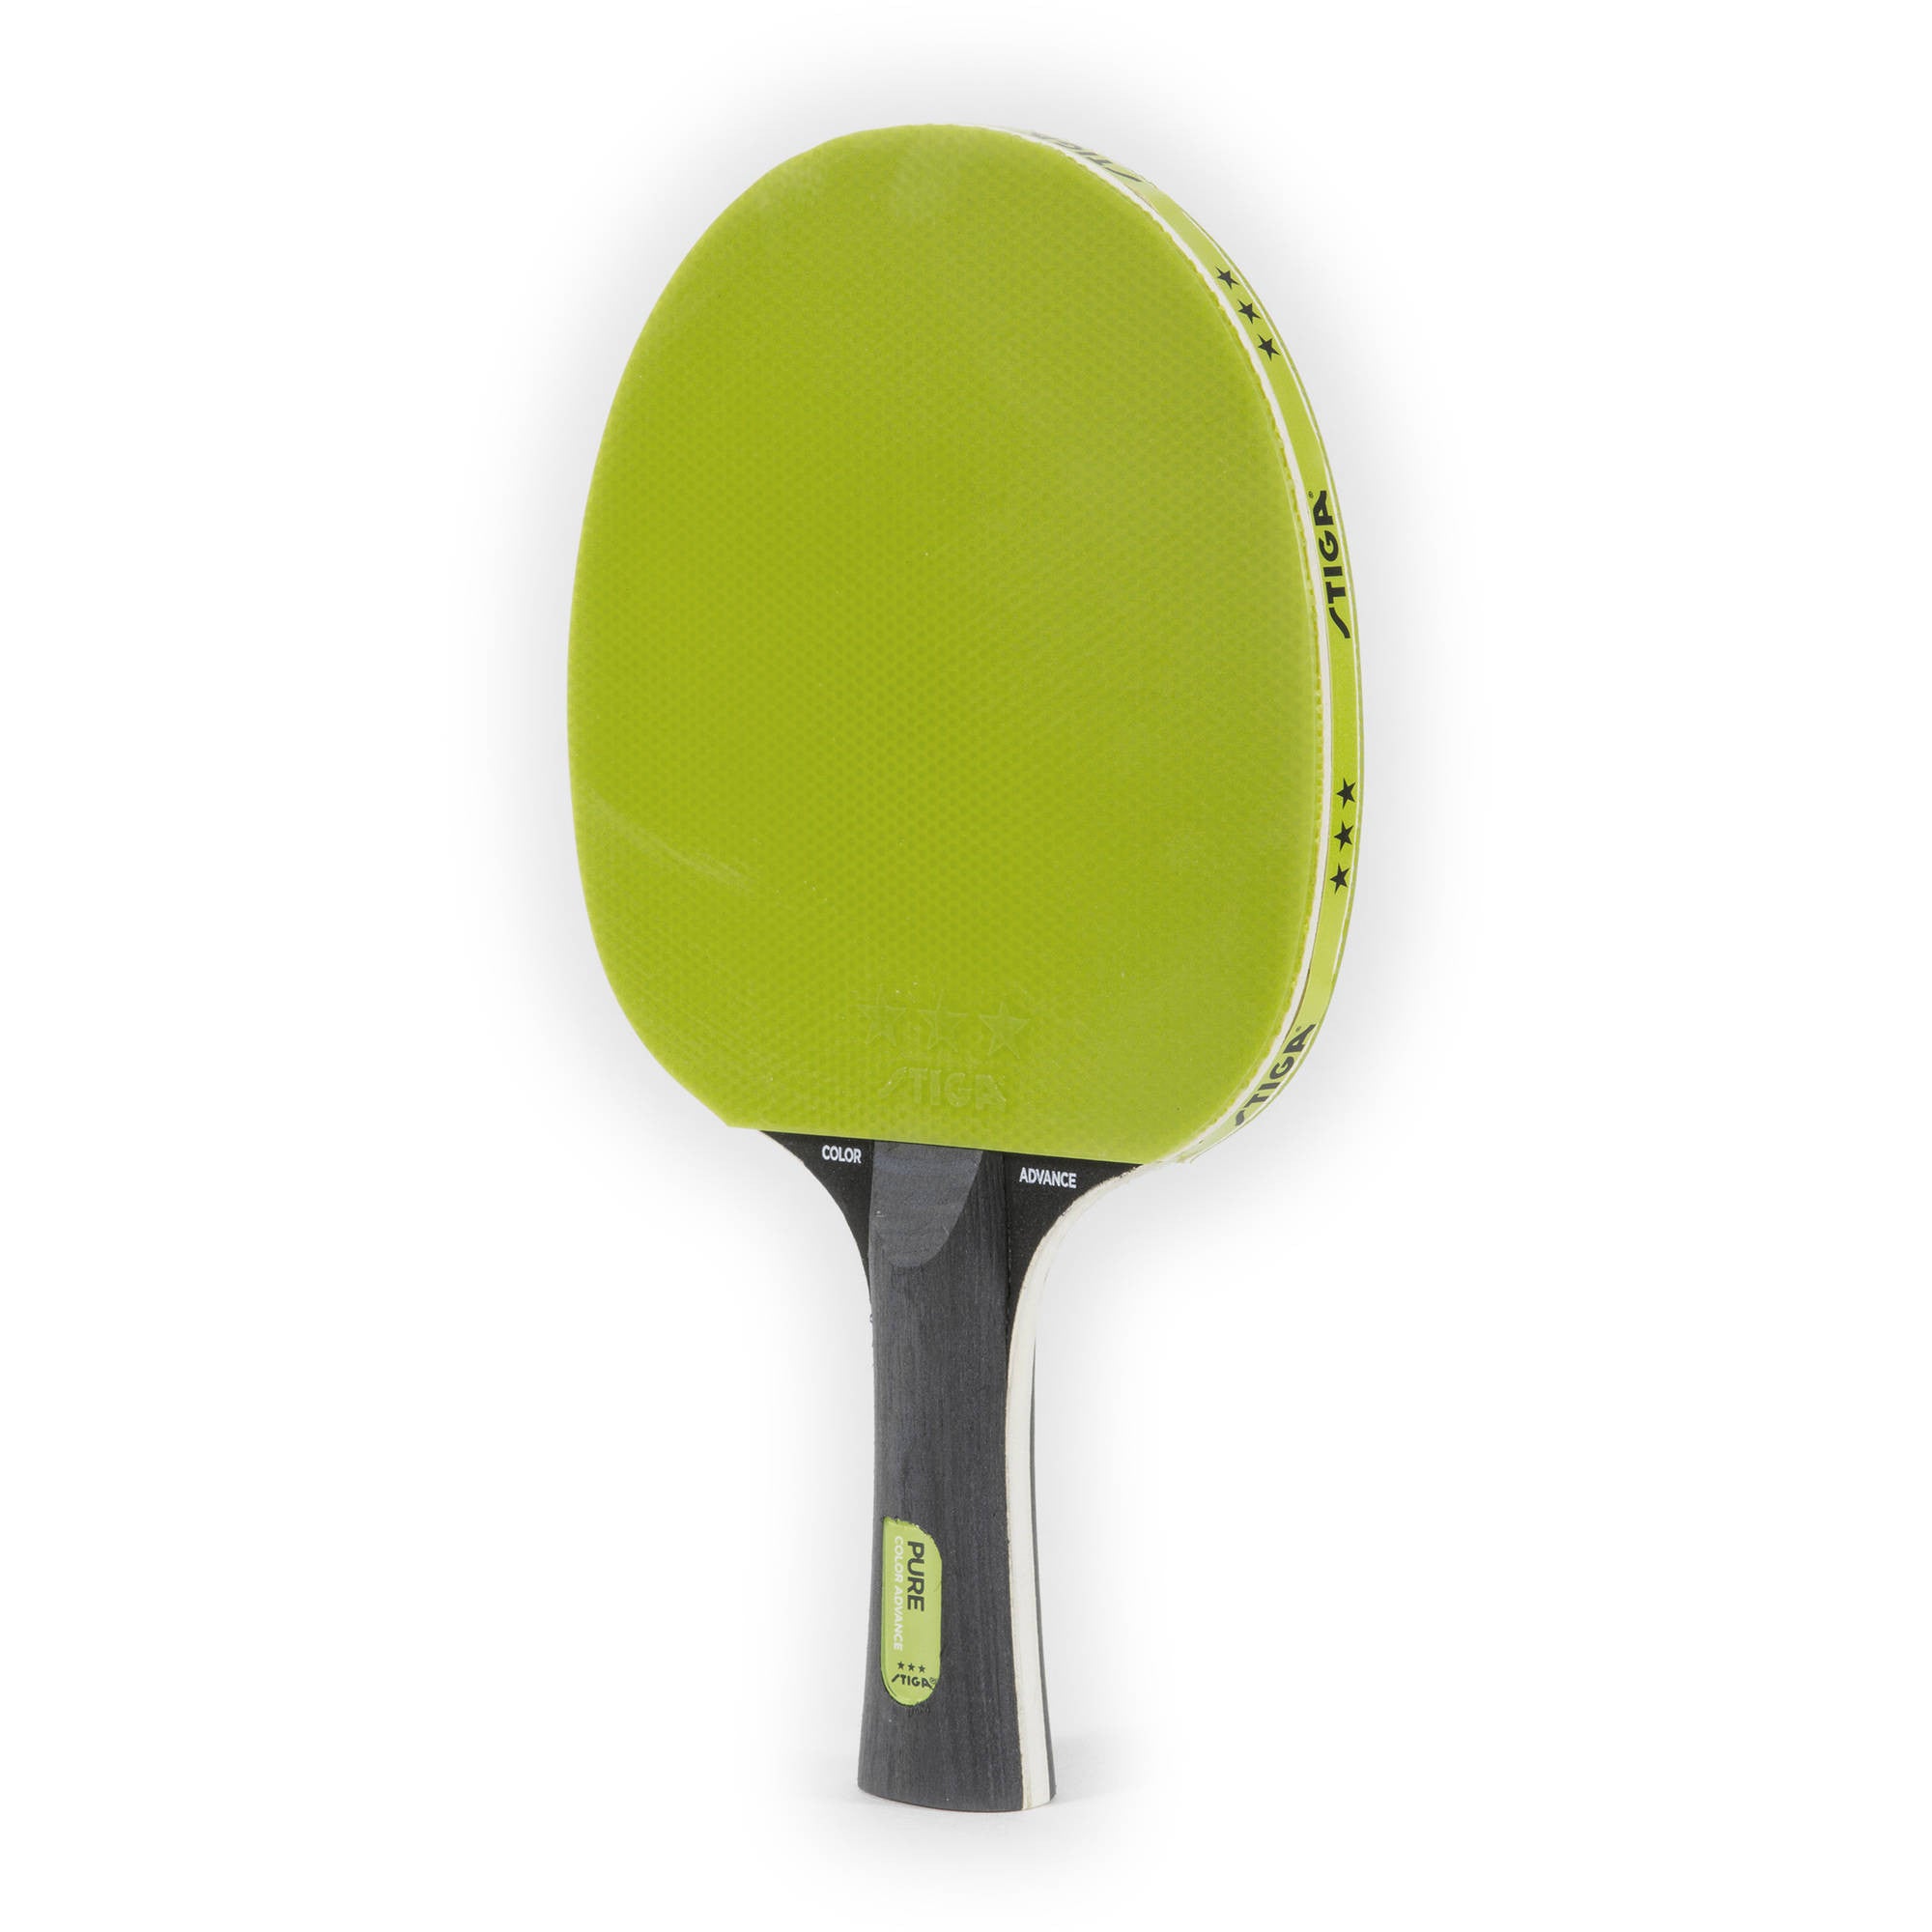 Stiga Pure Color Advance Green Table Tennis Racket